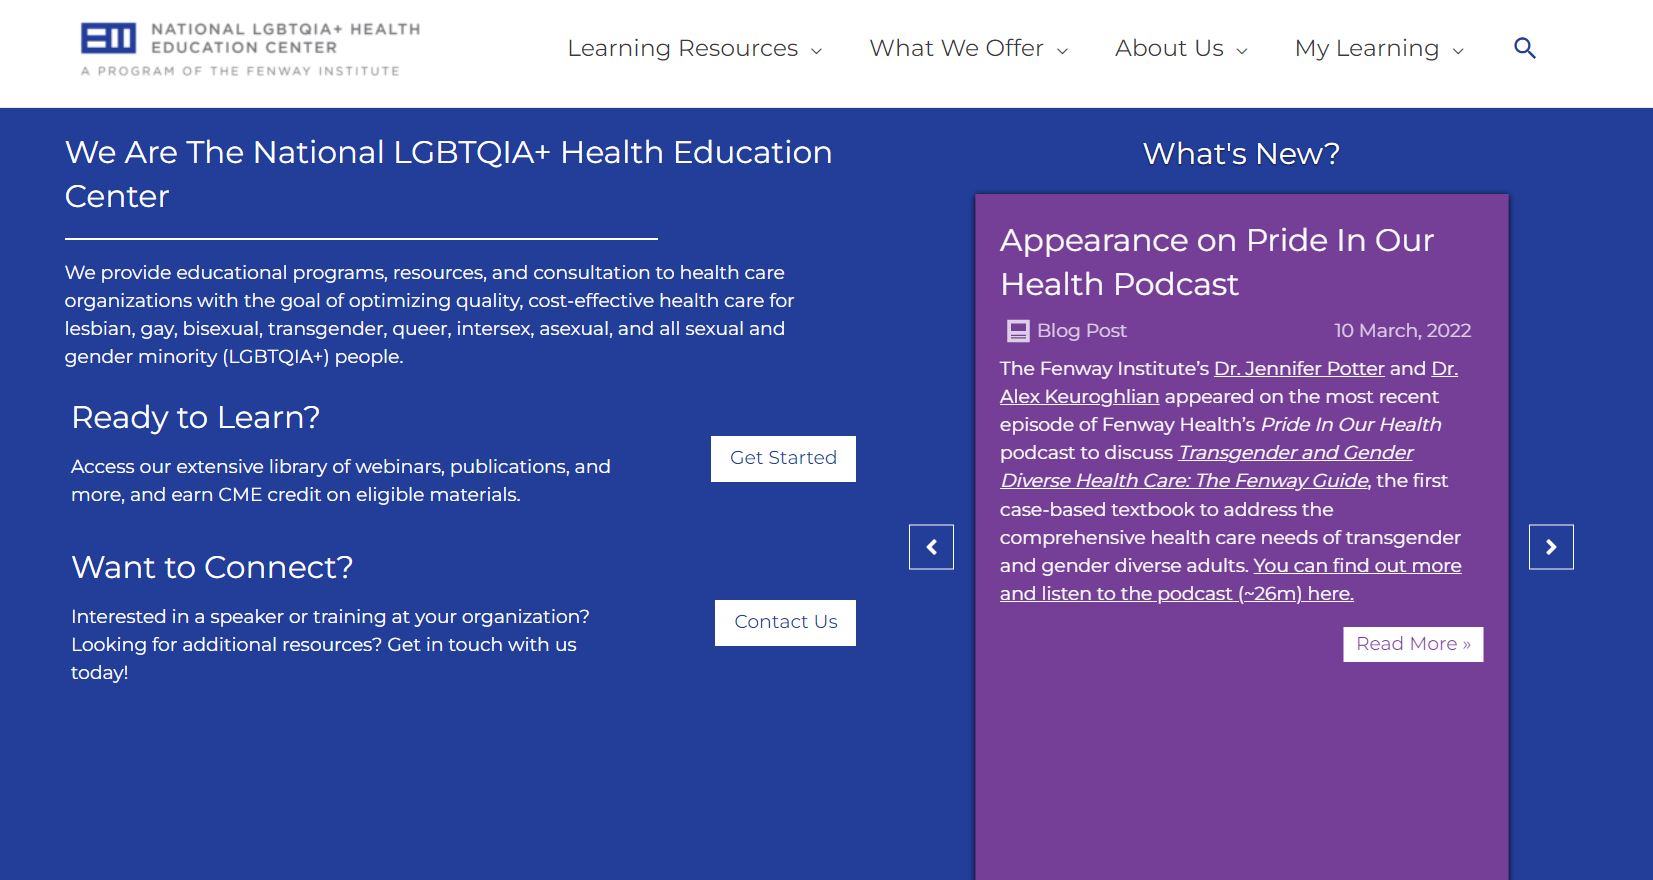 The National LGBTQIA+ Health Education Center